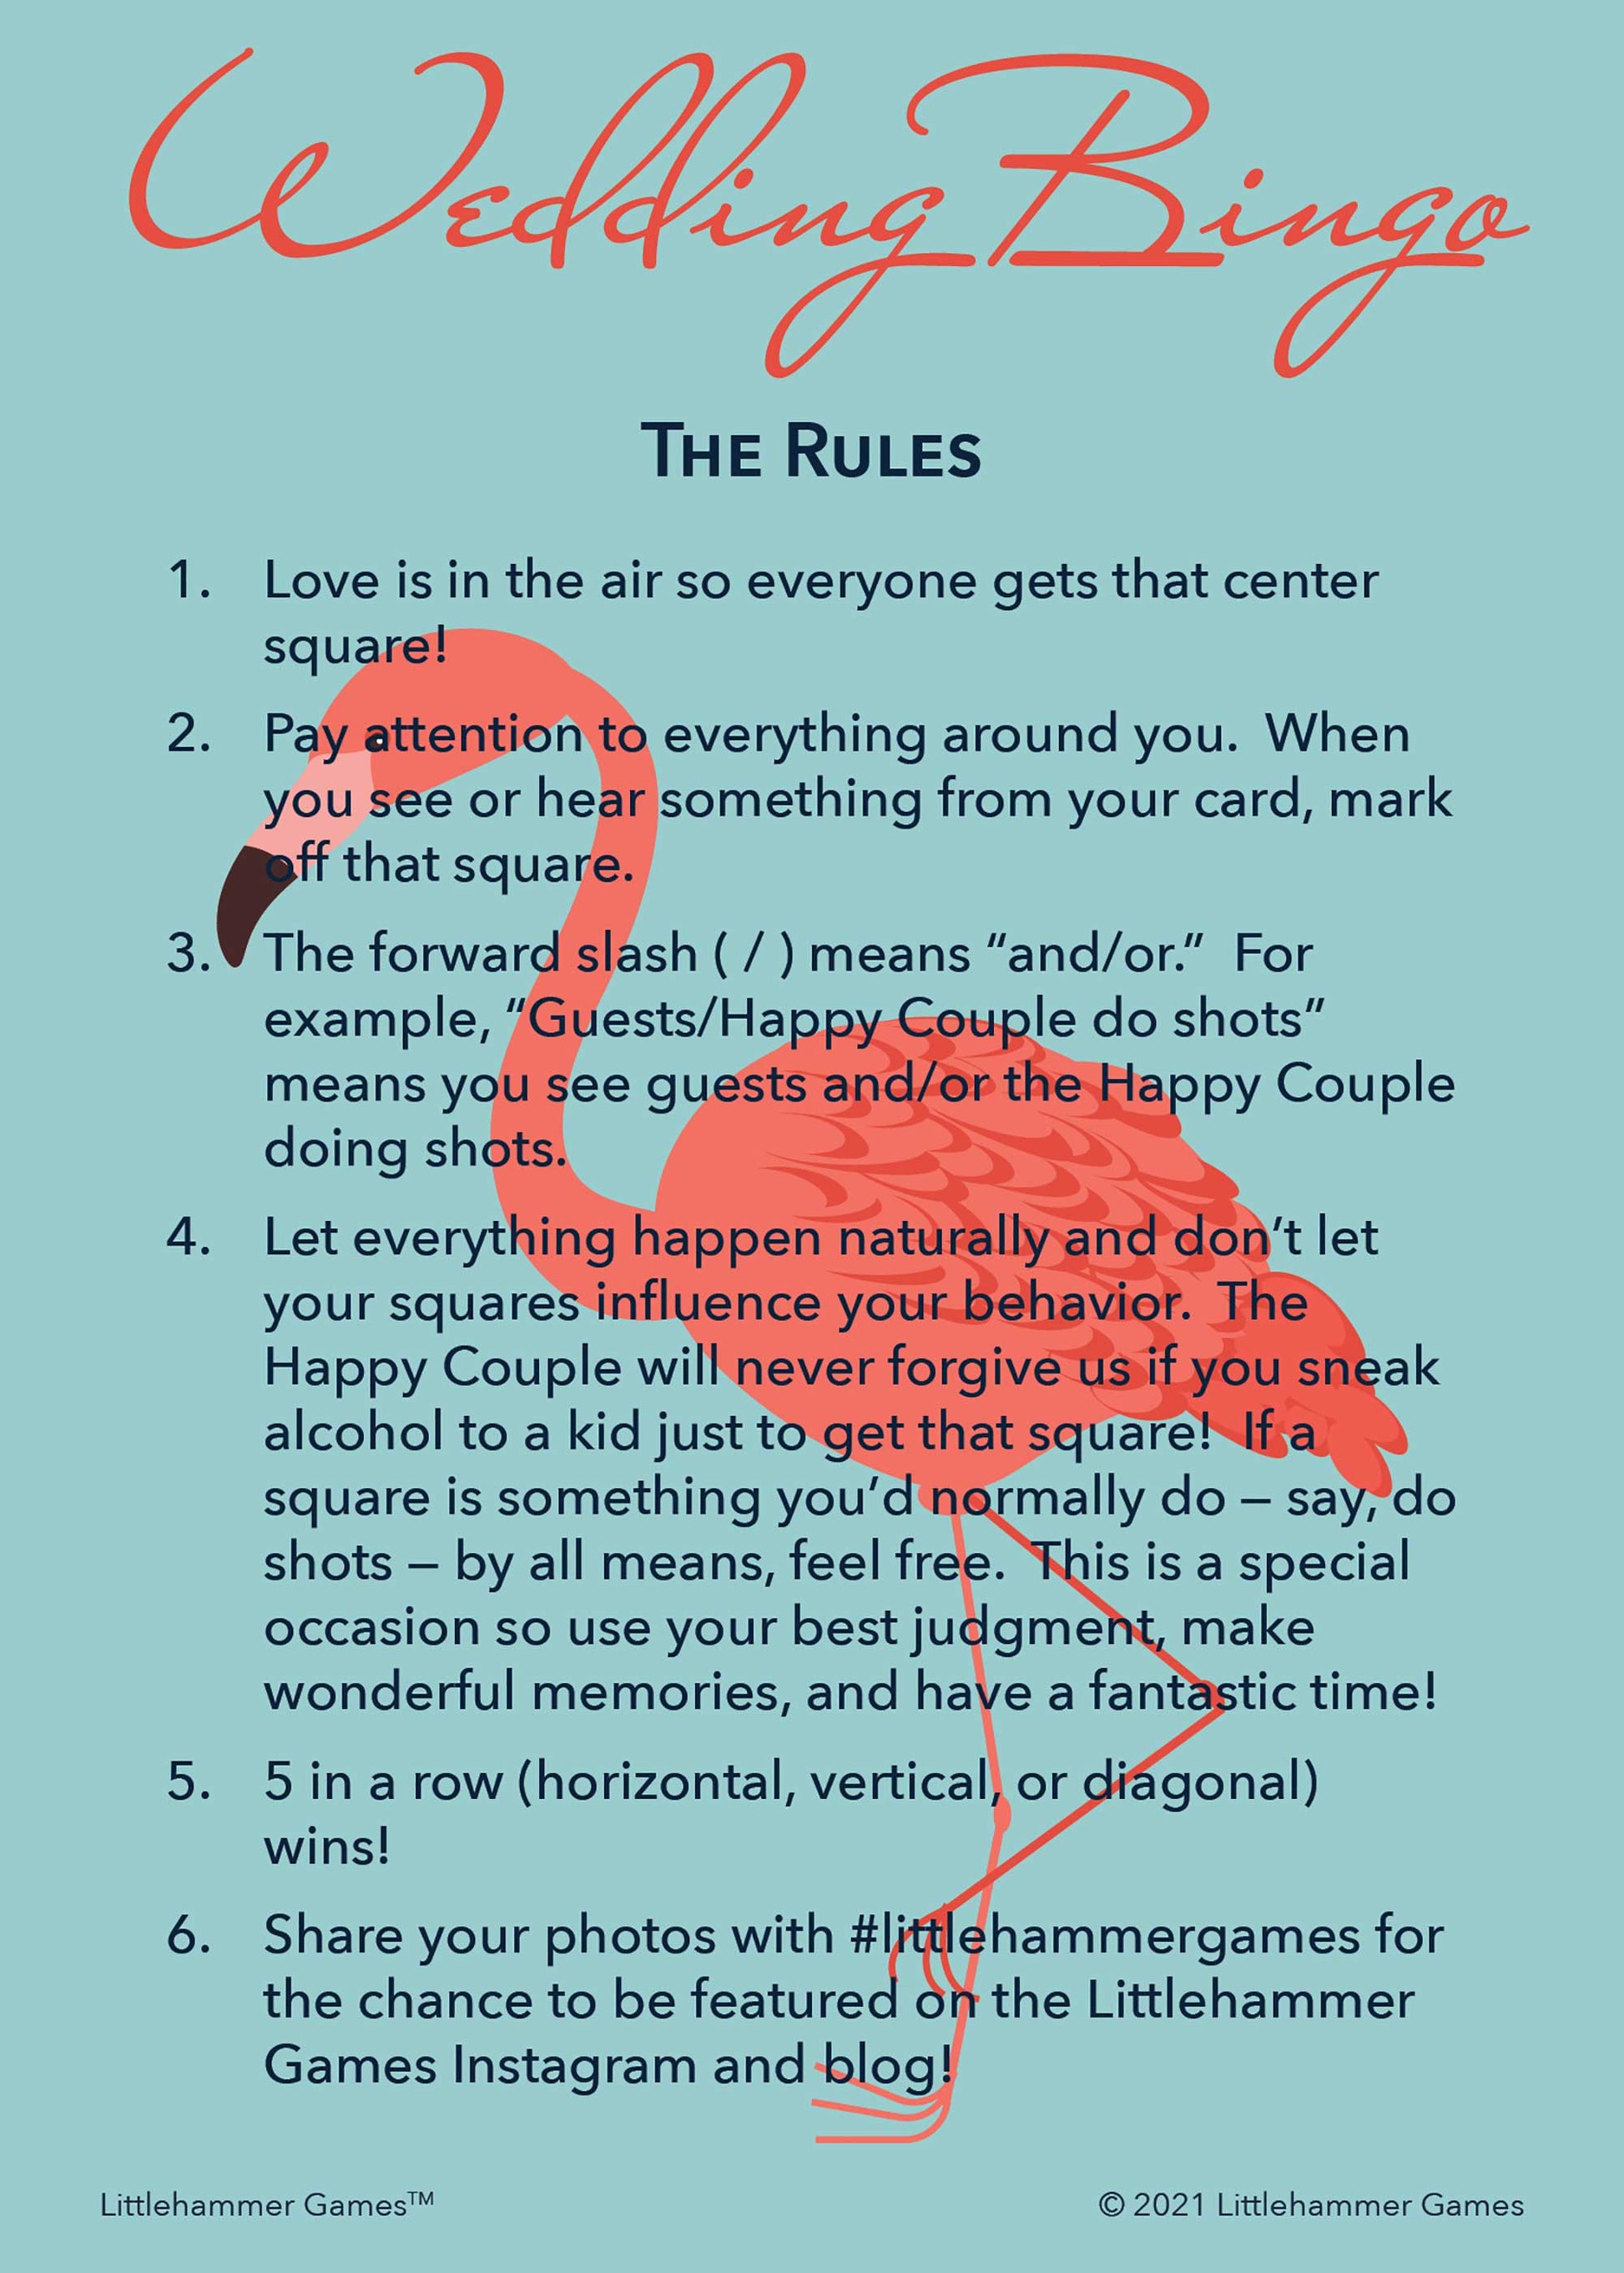 Wedding Bingo rules card on a flamingo background